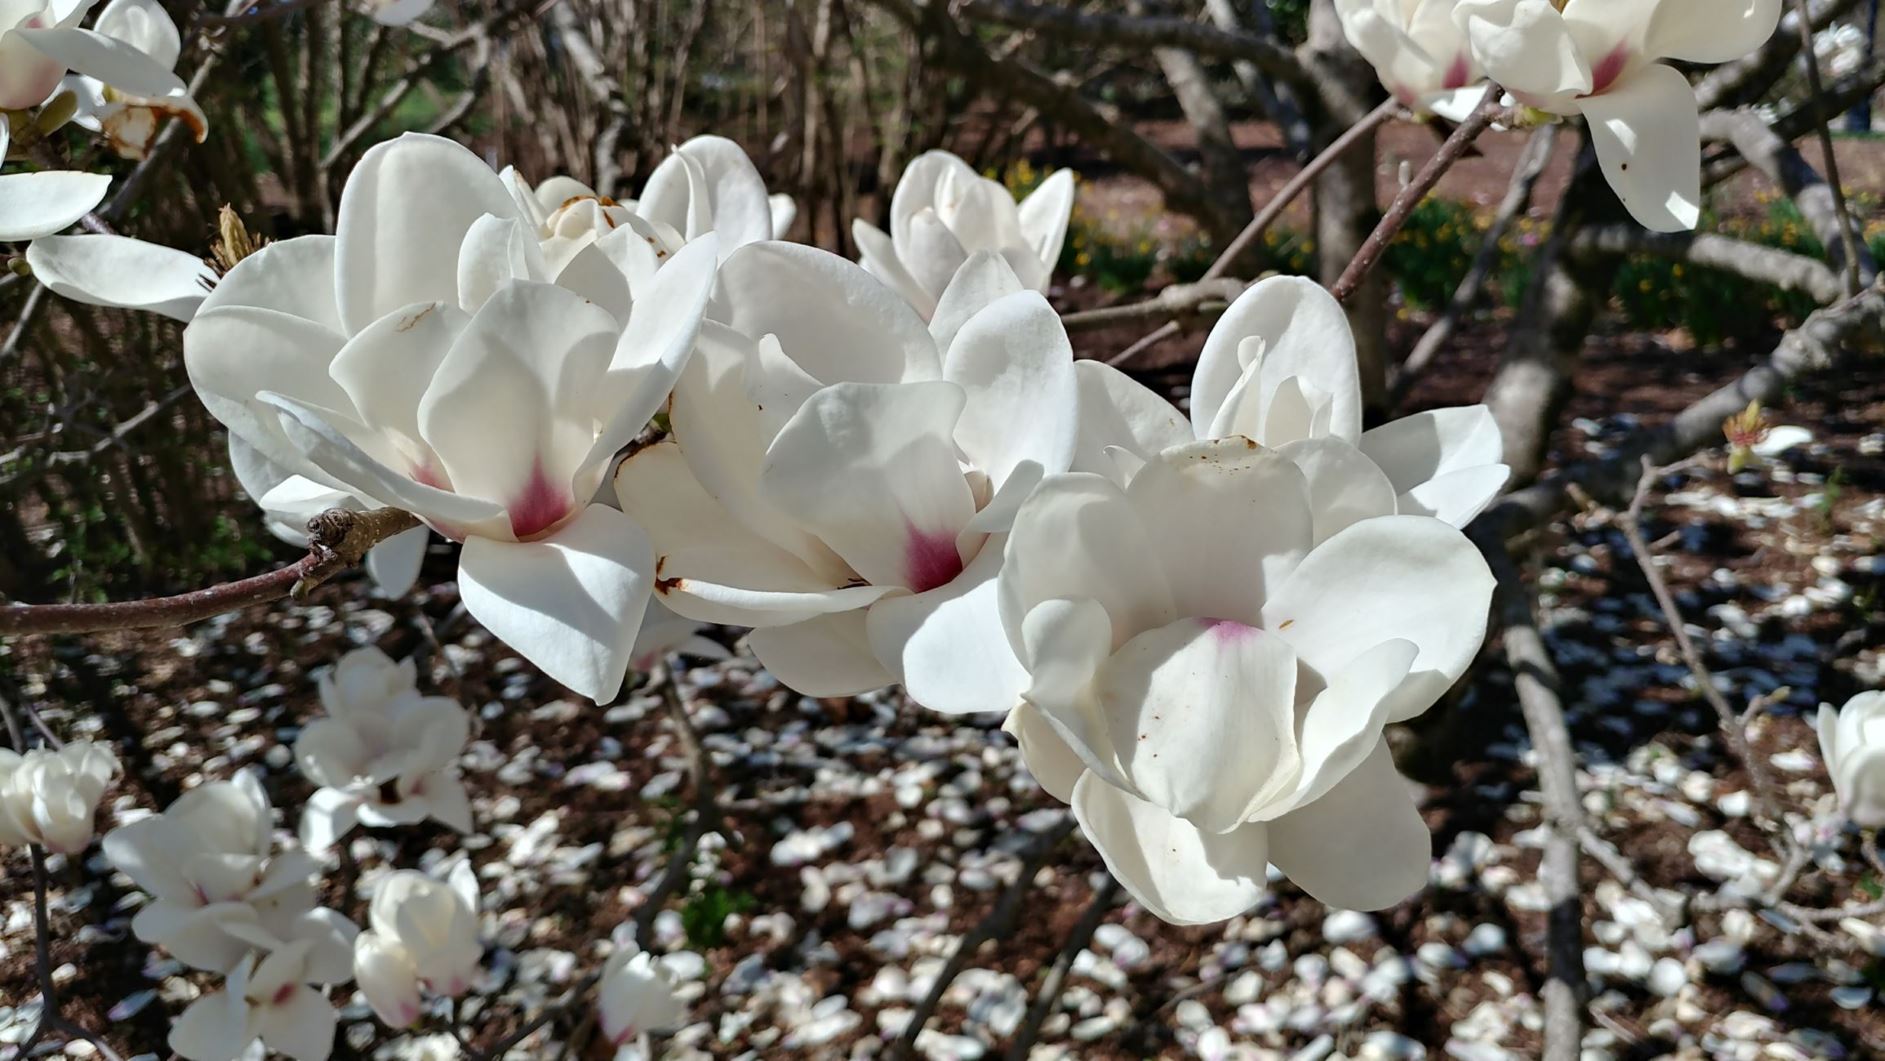 Magnolia ×soulangeana 'Lennei Alba' - saucer magnolia